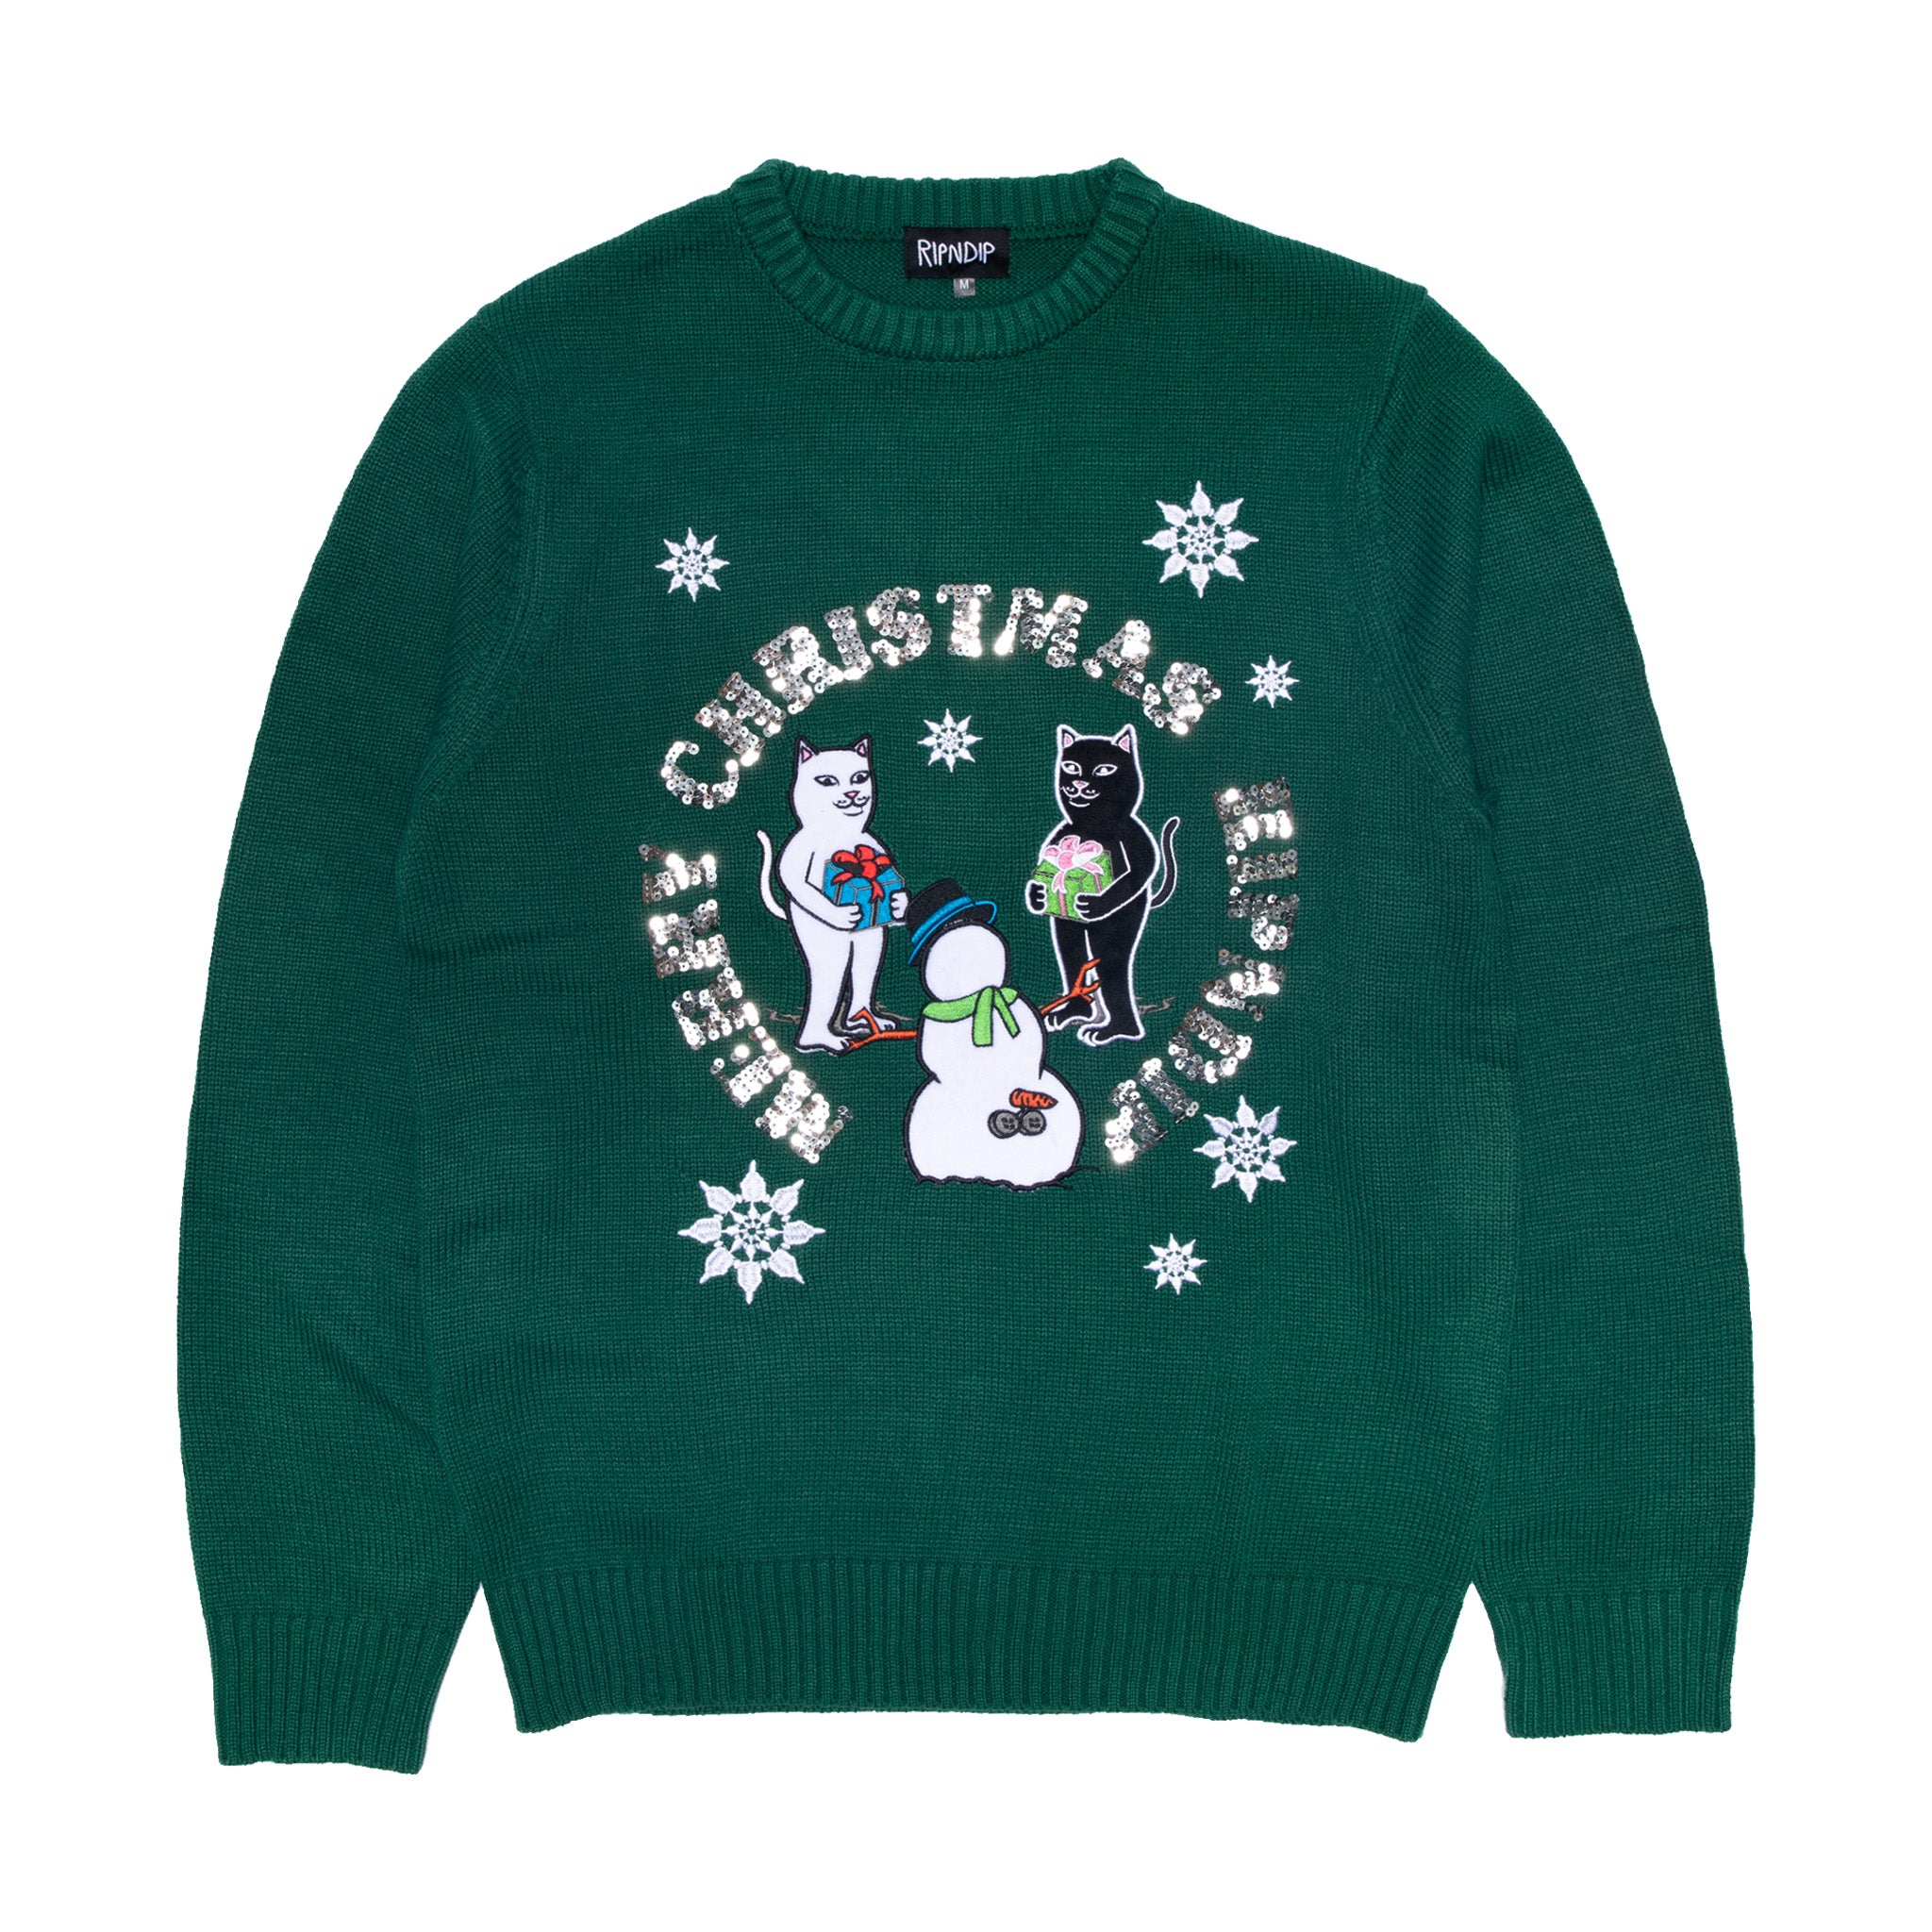 Tis The Season Sweater (Hunter Green)